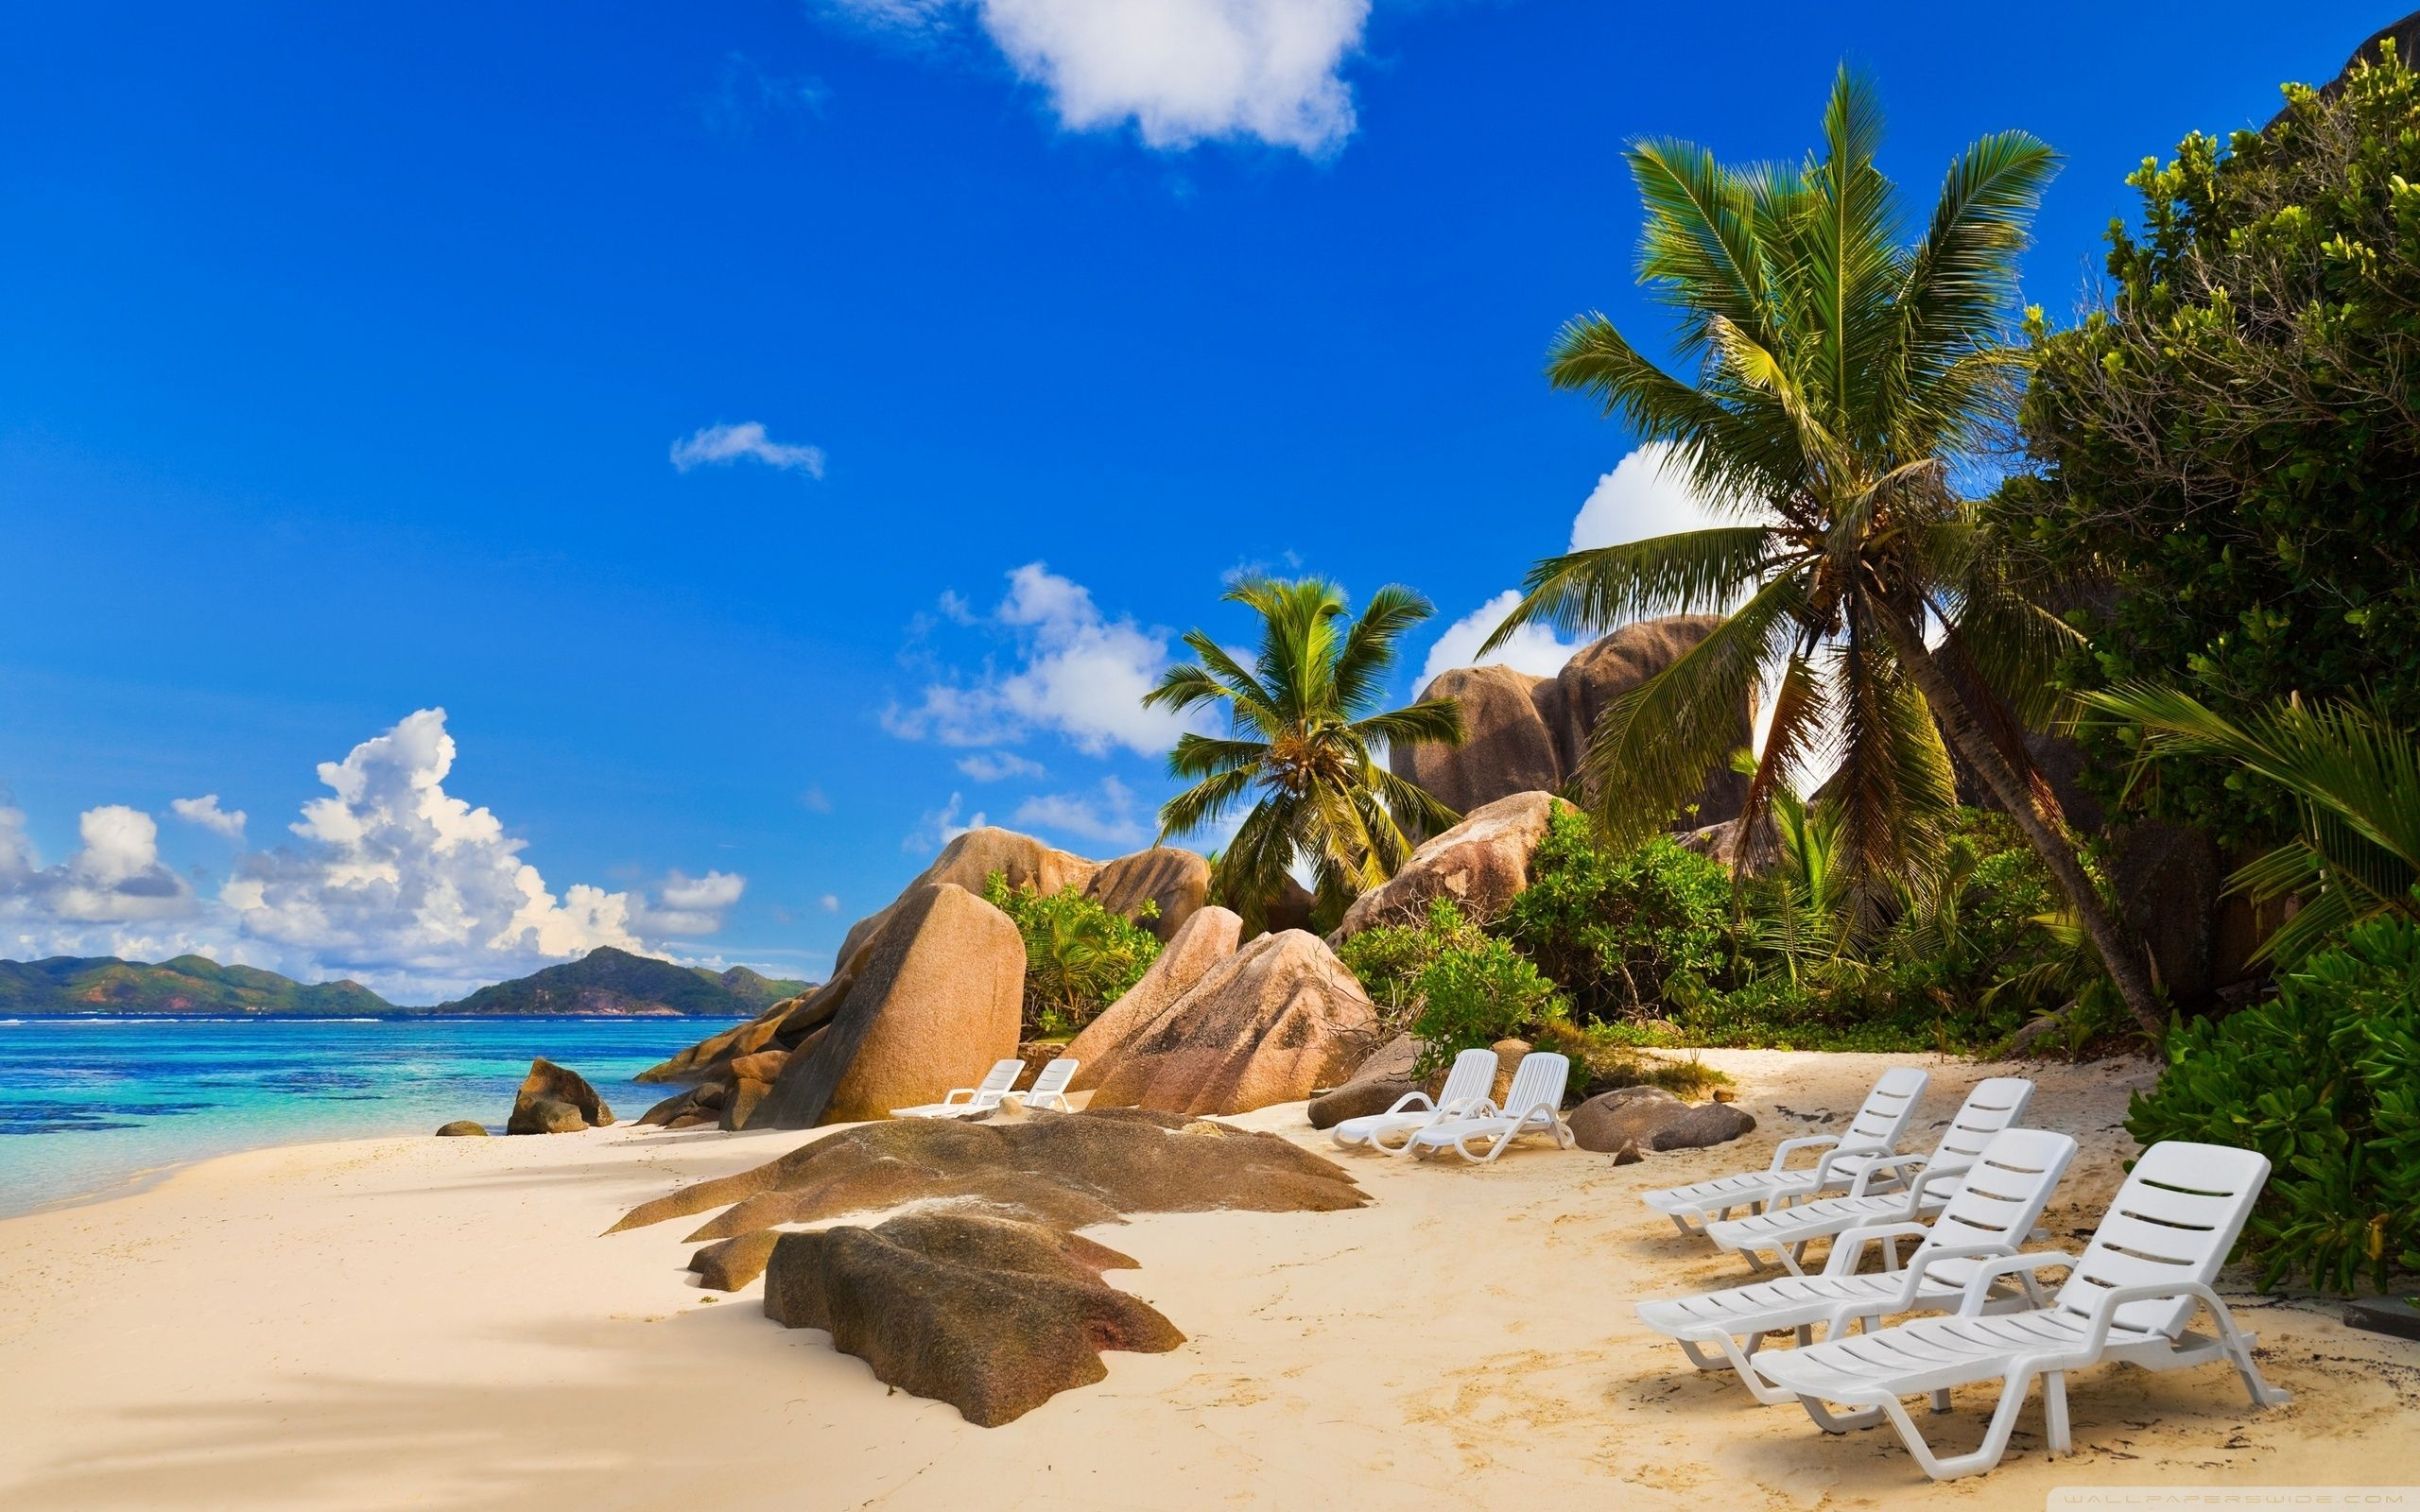 2560x1600 Seychelles Landscape Desktop Wallpapers Top Free Seychelles Landscape Desktop Backgrounds